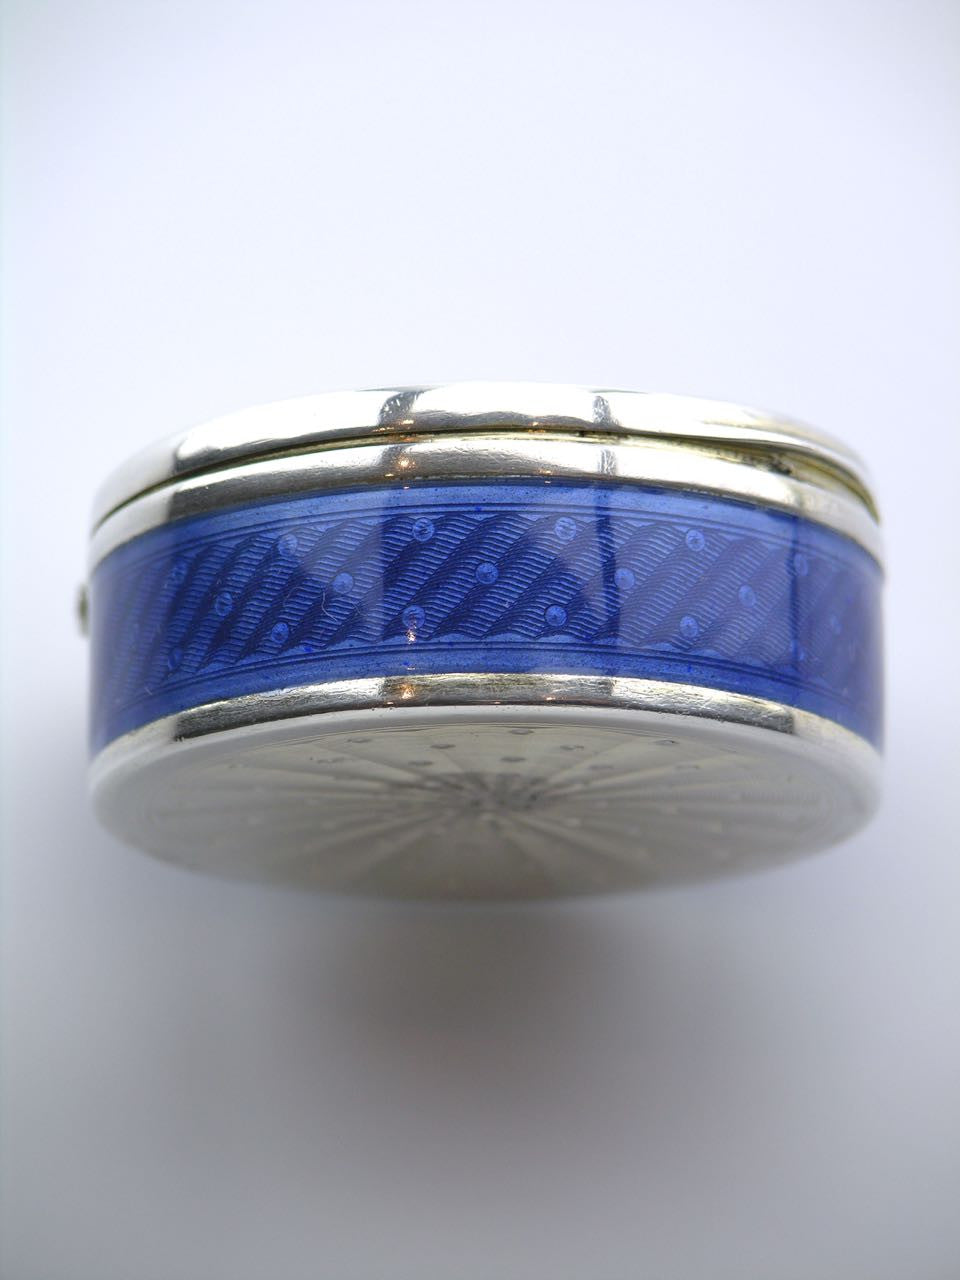 American solid silver cornflower blue enamel round box